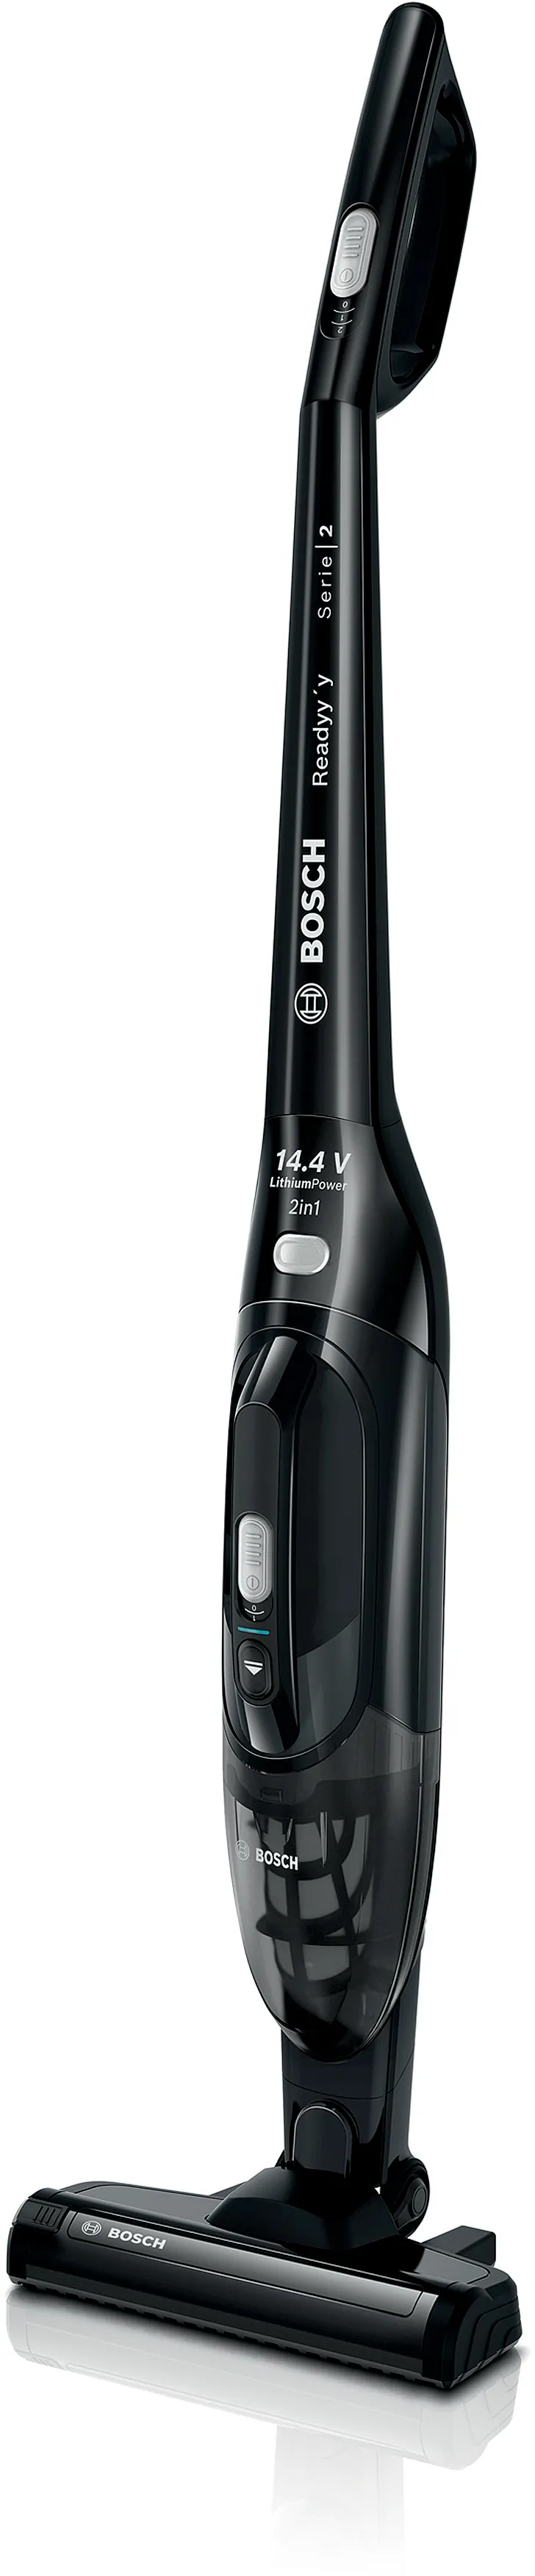 Series 2 Rechargeable vacuum cleaner Readyy'y 14.4V Black 